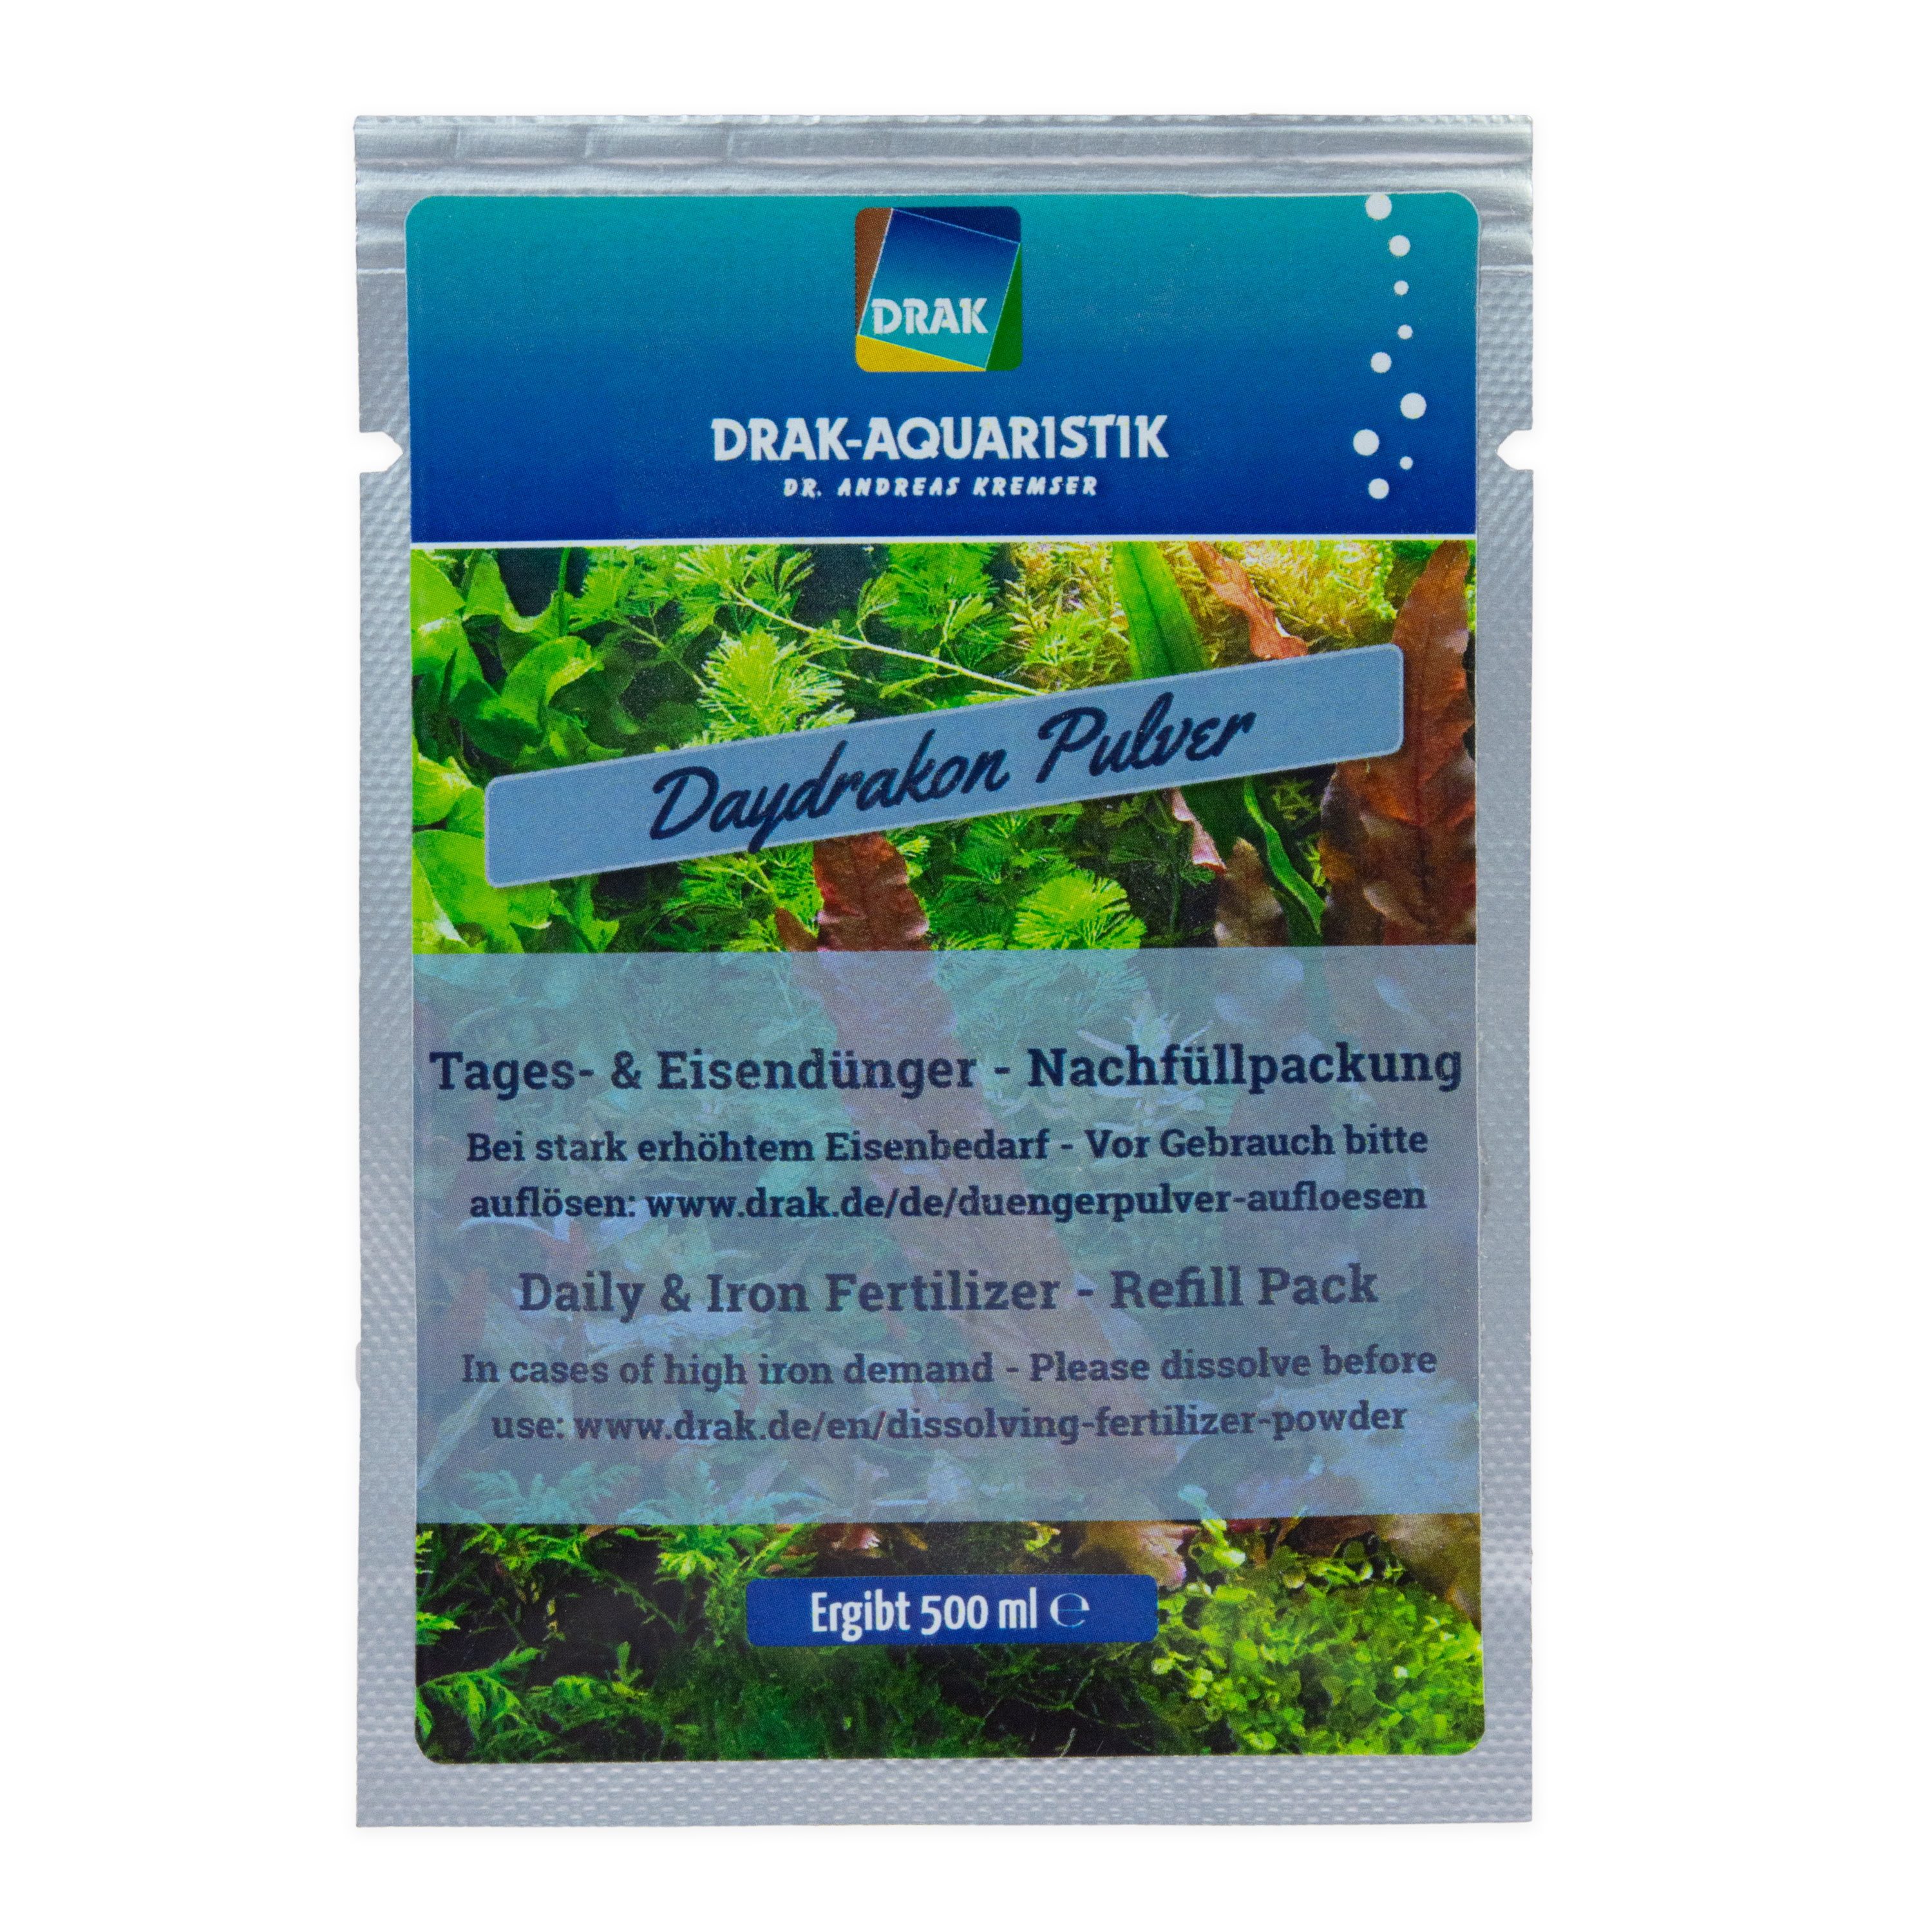 Daydrakon Daily Fertilizer & Iron Fertilizer 0.5 l Refill Pack